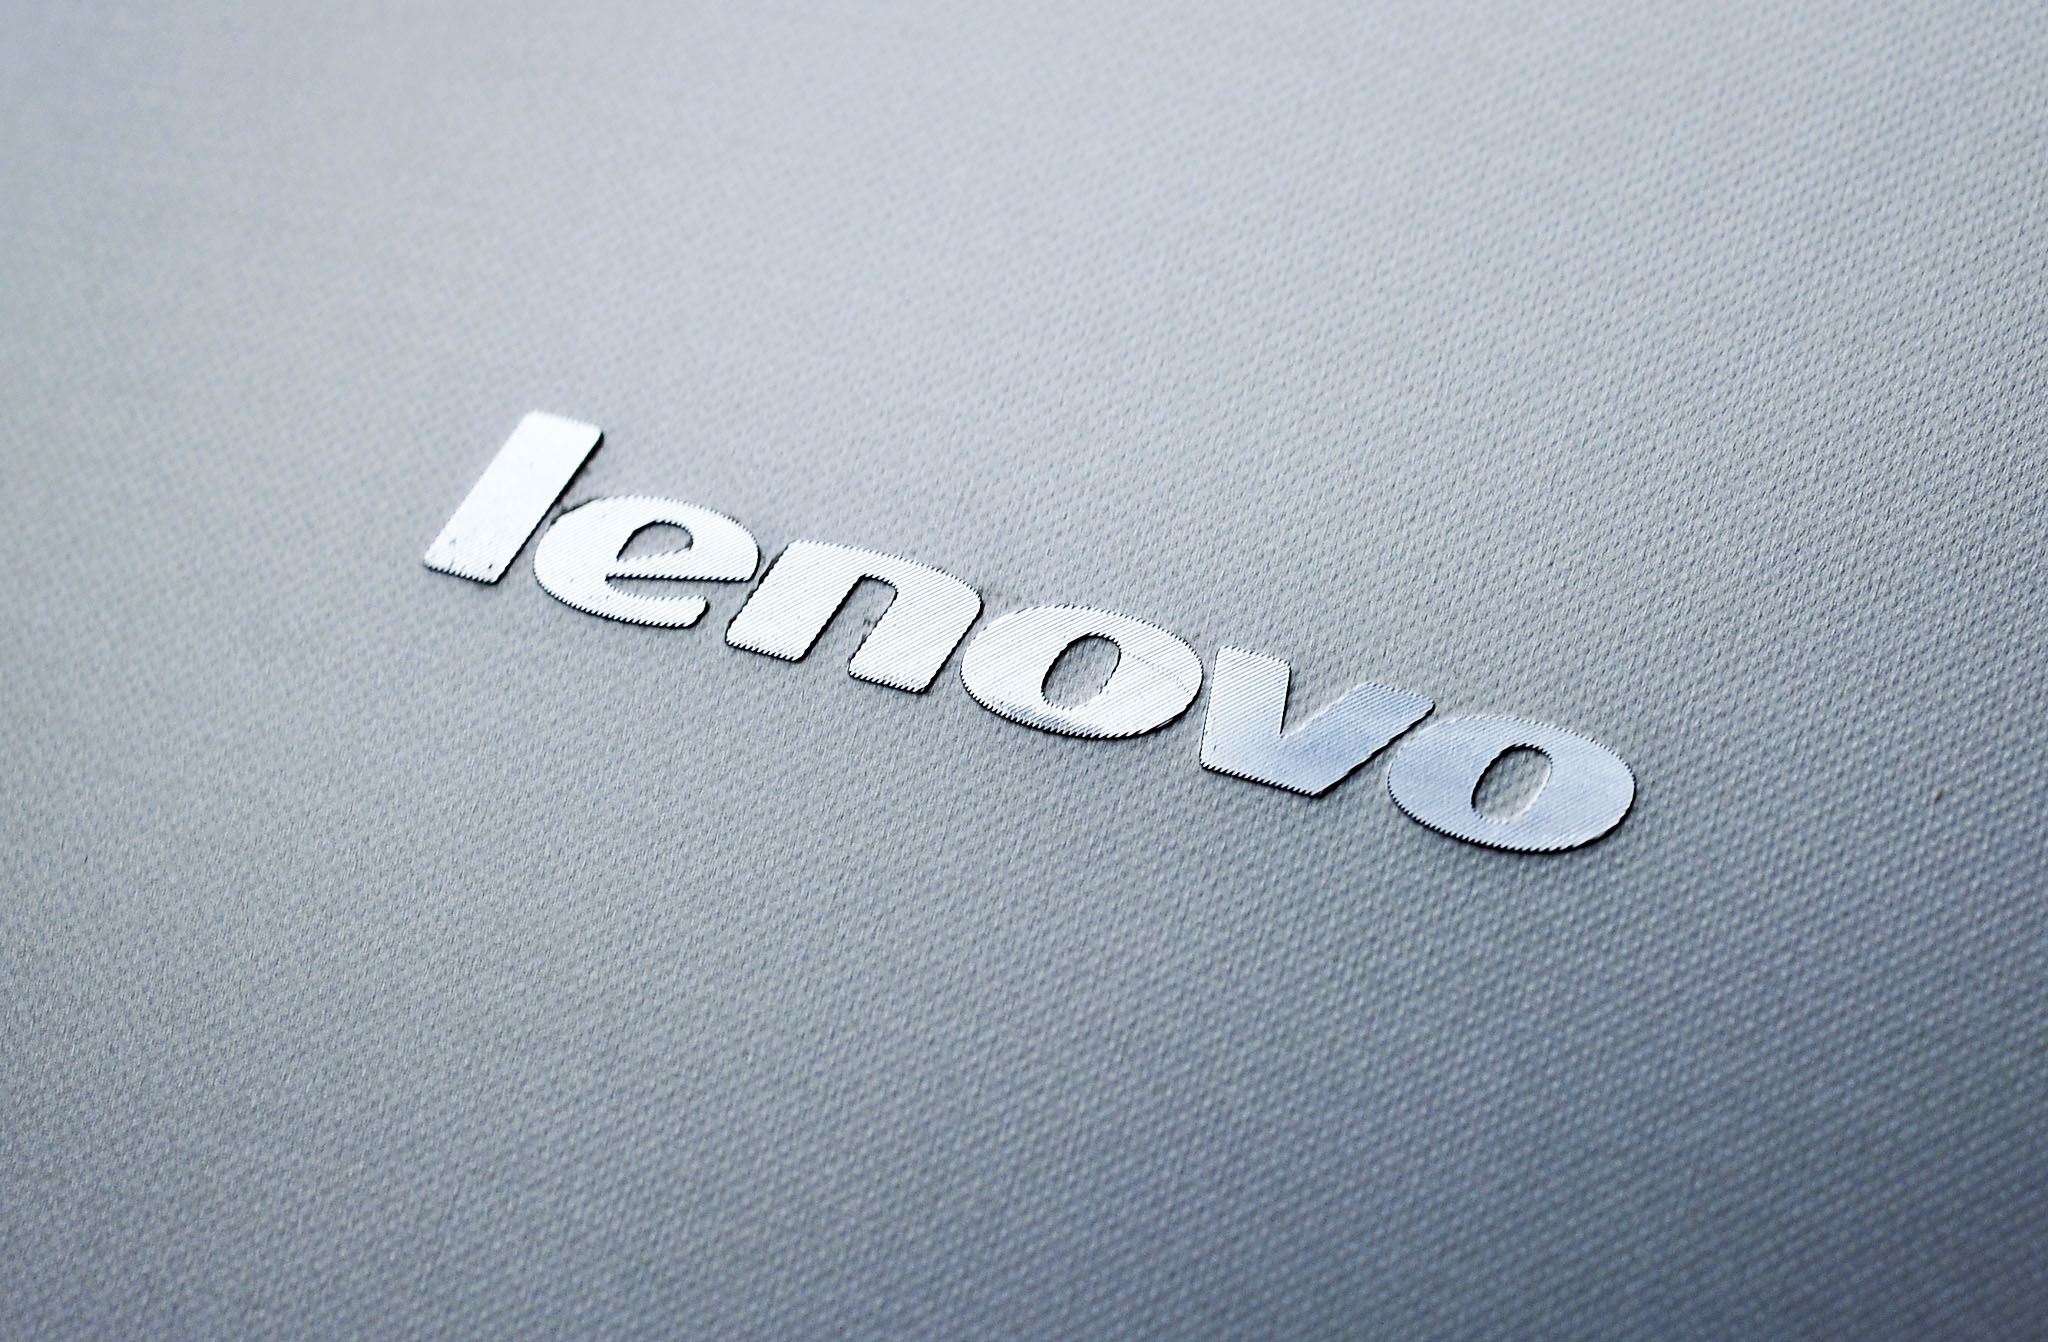 Lenovo_logo.jpg